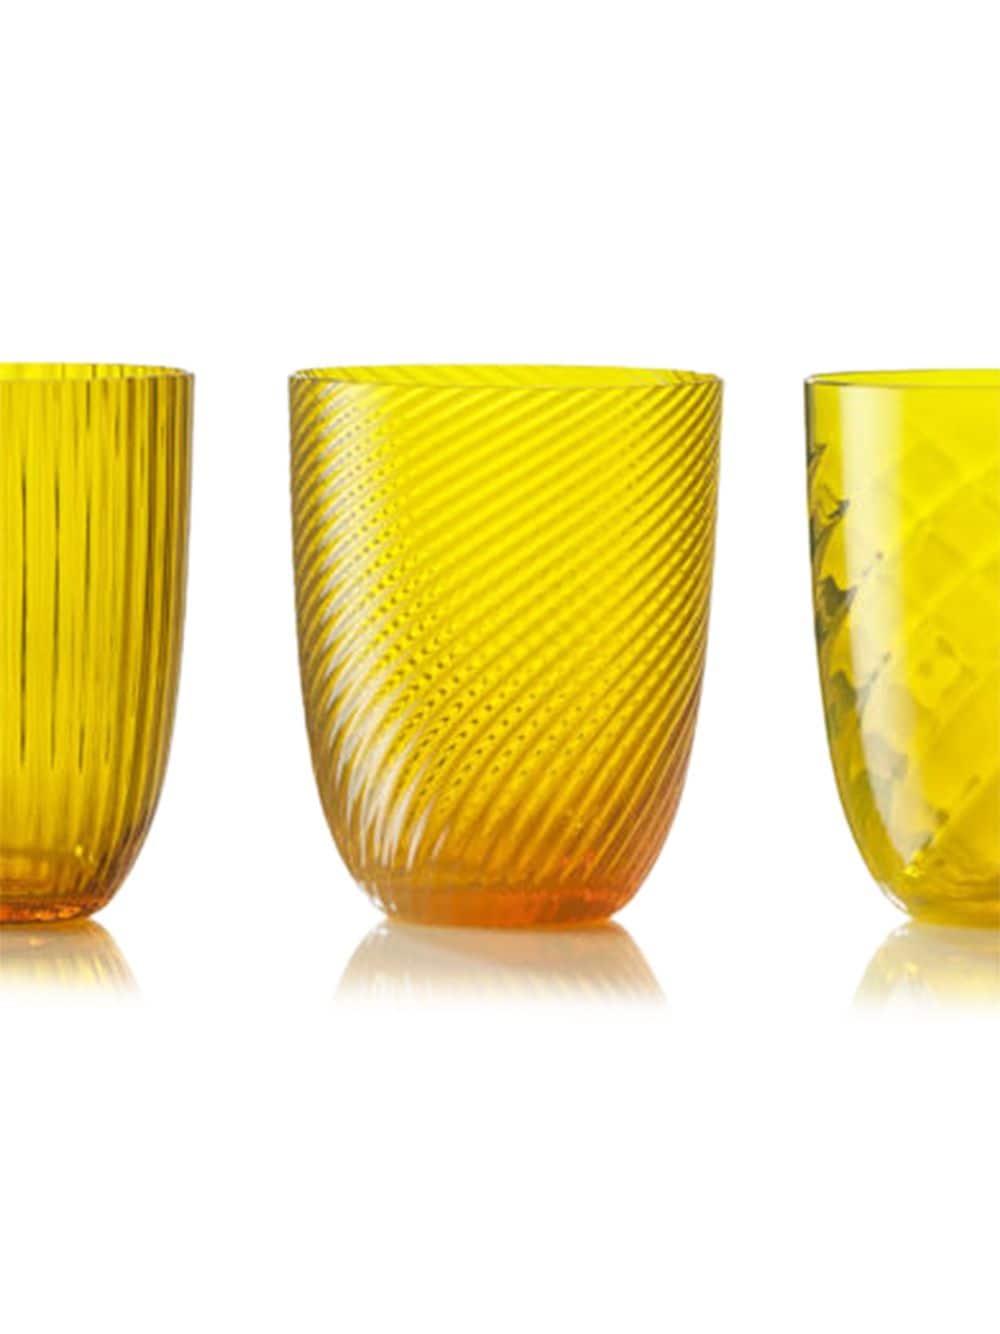 фото Nasonmoretti набор idra из шести стаканов